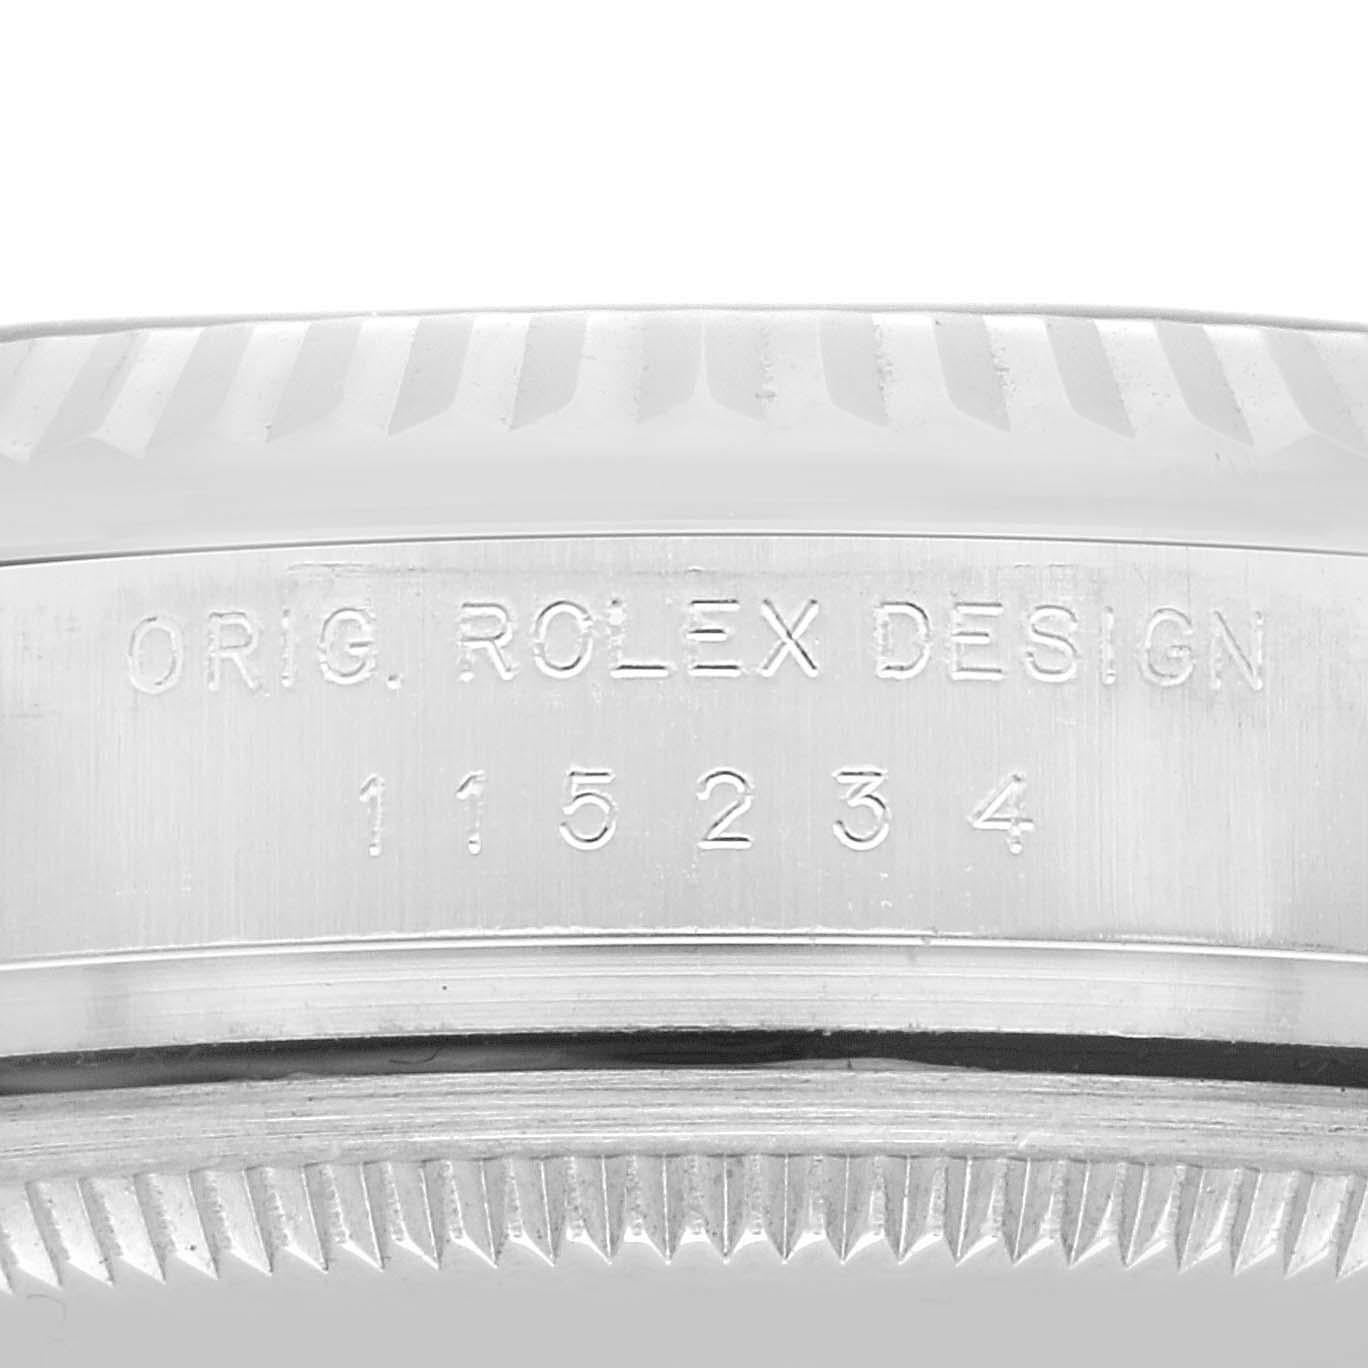 Rolex Date 34 Steel White Gold Black Diamond Dial Mens Watch 115234 3